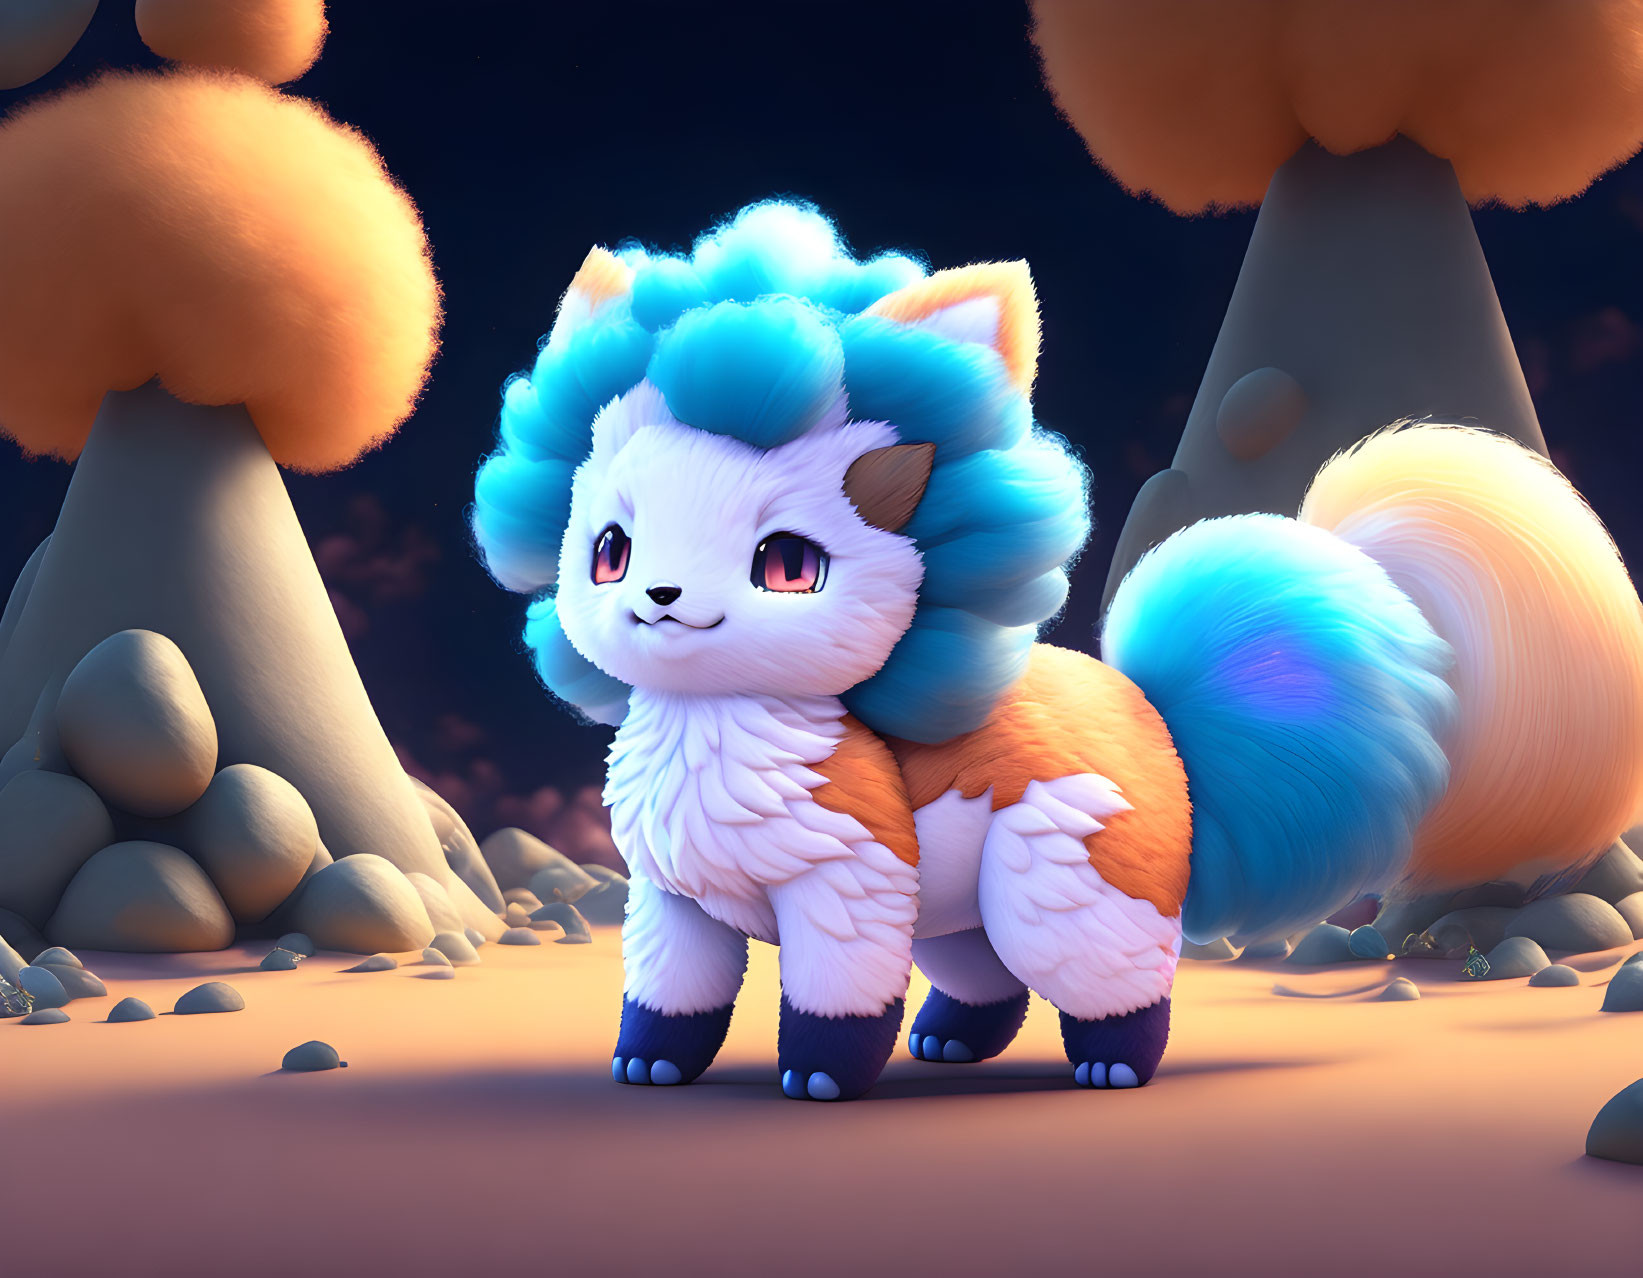 Blue and White Fluffy Cartoon Feline in Whimsical Orange Stone Environment